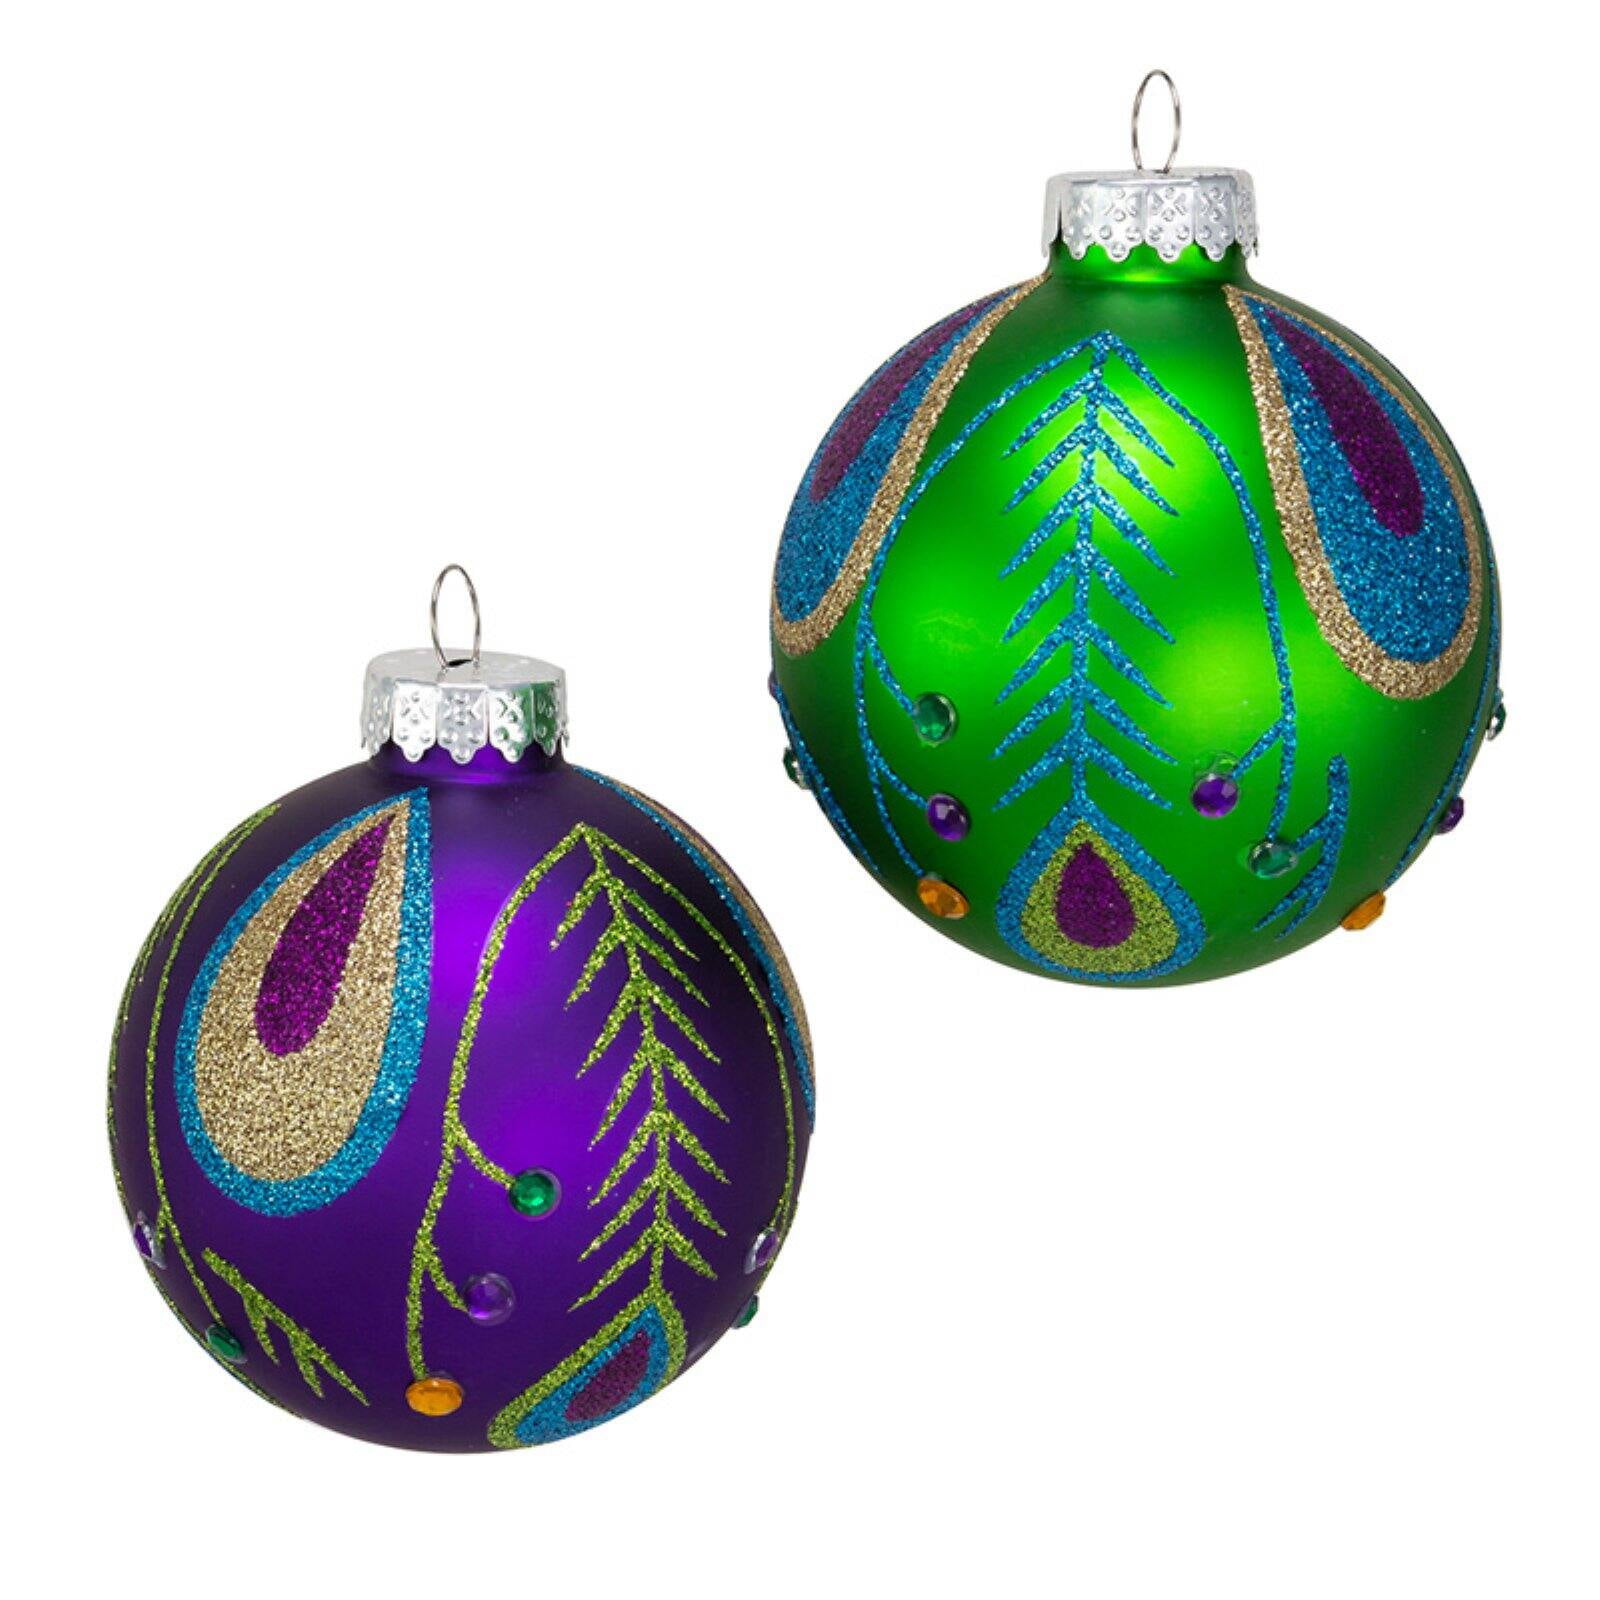 California Glass Ball Christmas Ornament 3.25 Inches San Antonio 